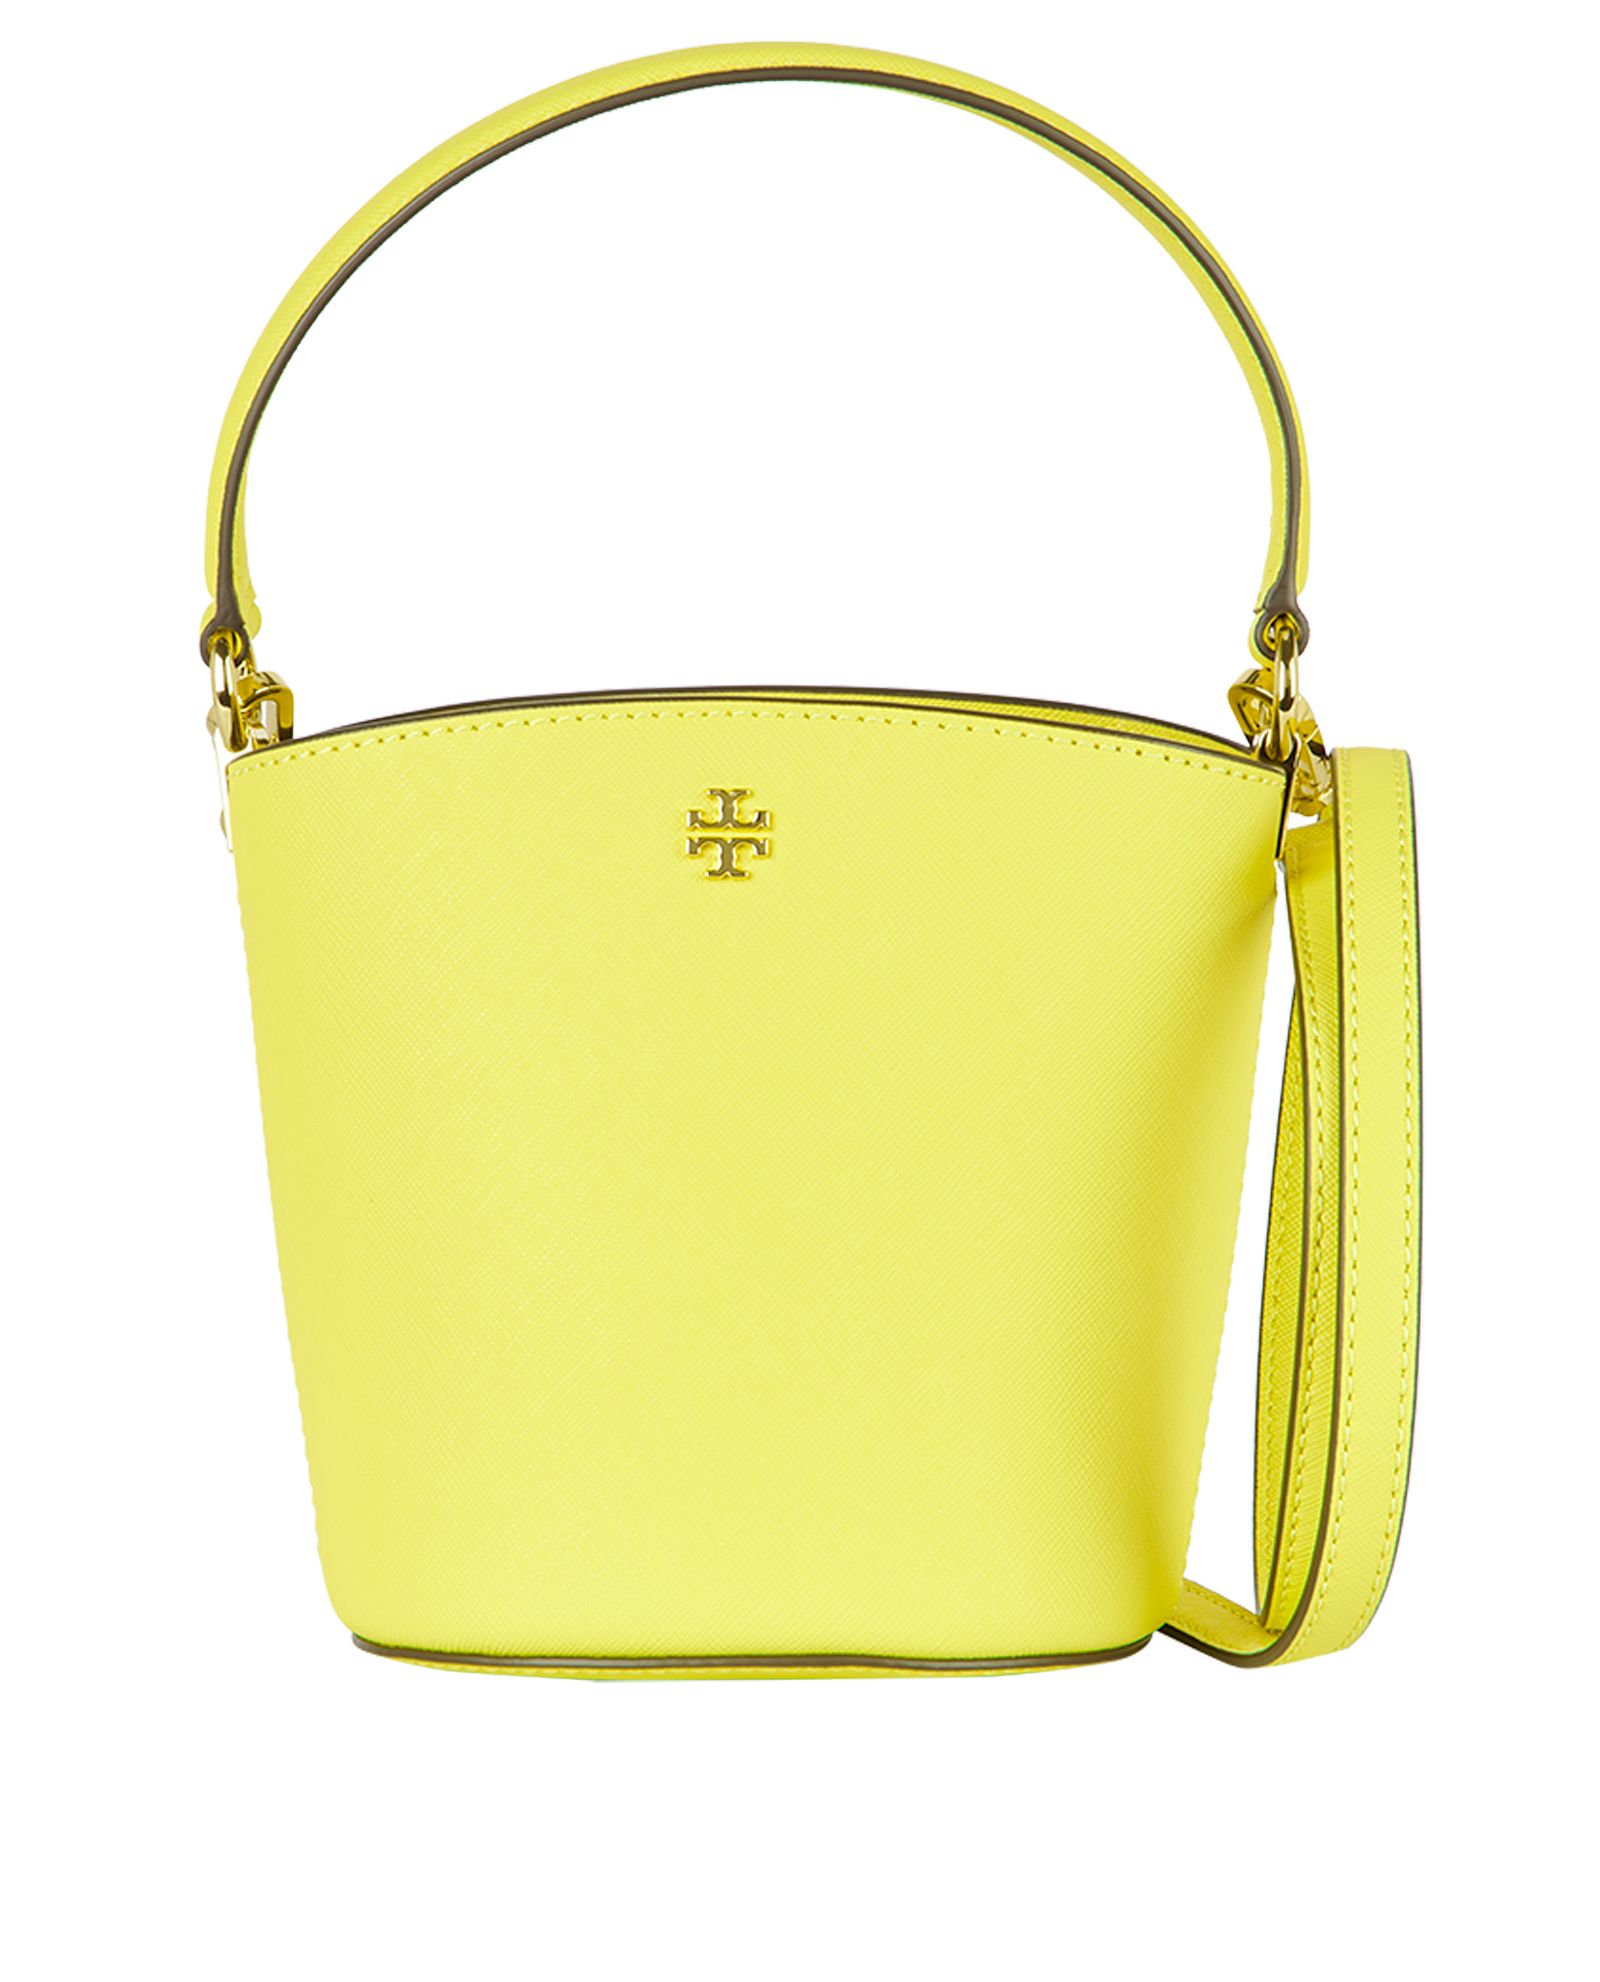 NWT 100% AUTHENTIC Tory Burch emerson mini bucket bag Blue/Green/Yellow  $428 